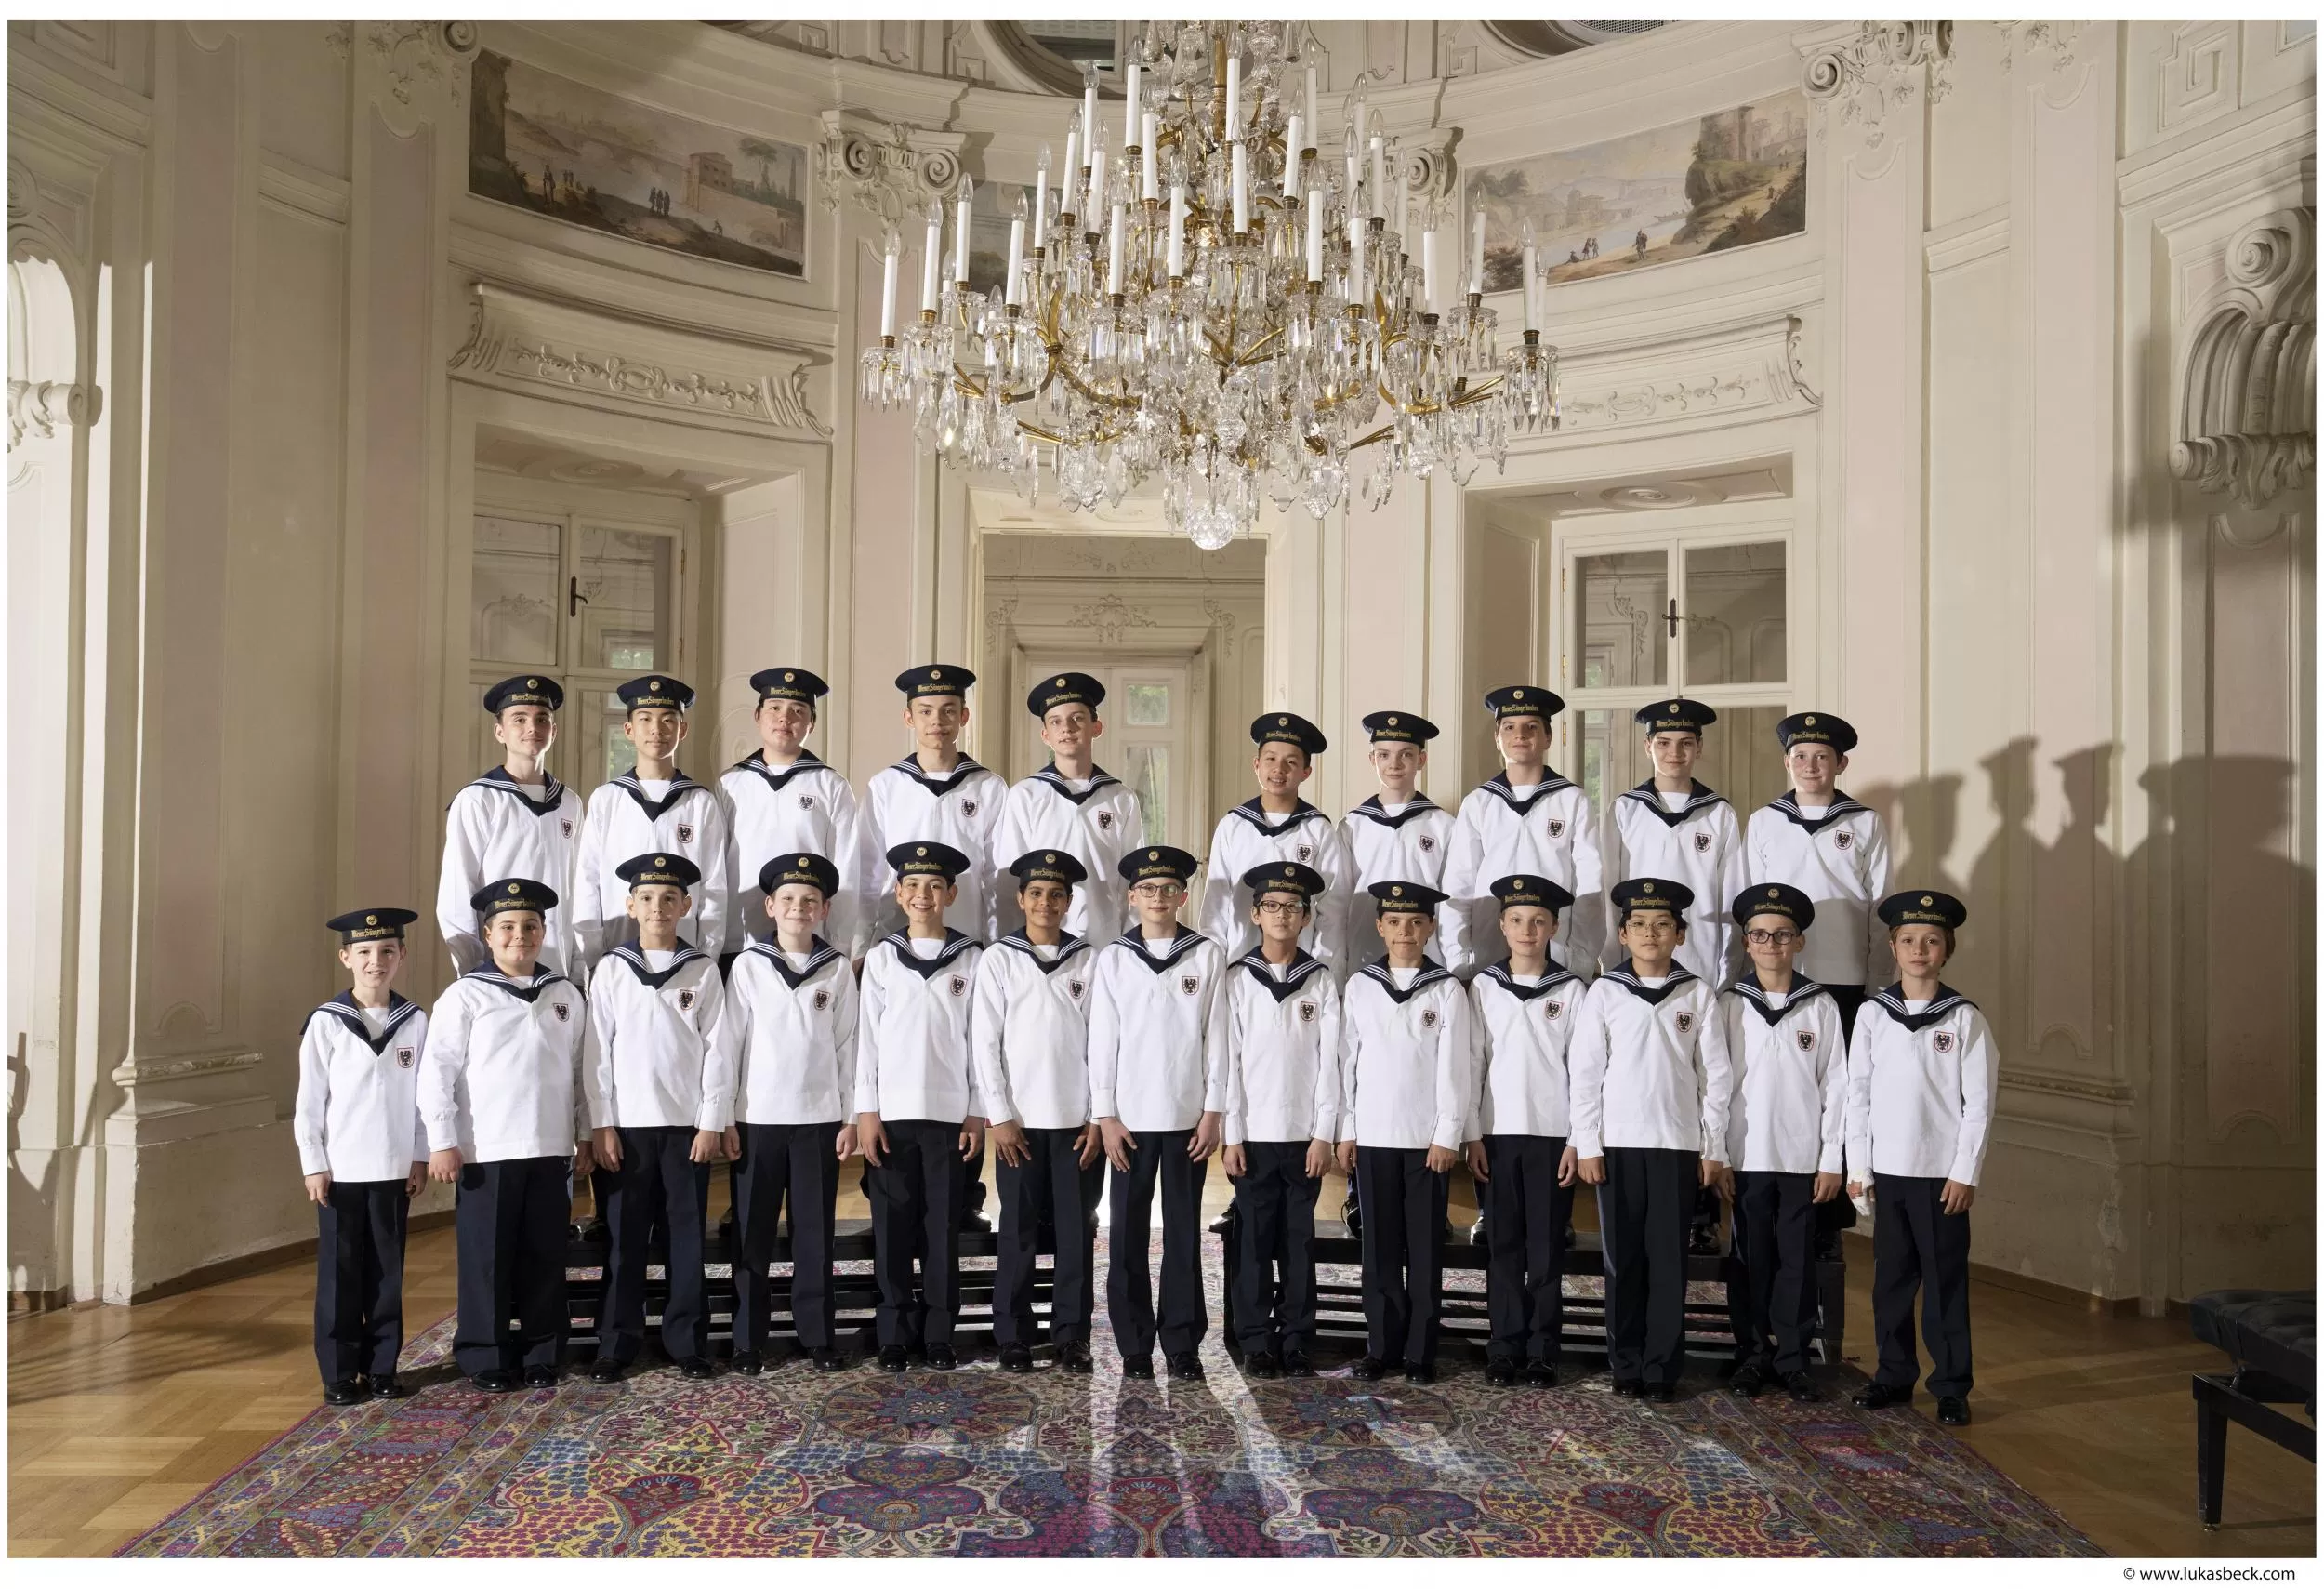 Vienna Boys Choir  “Christmas in Vienna”